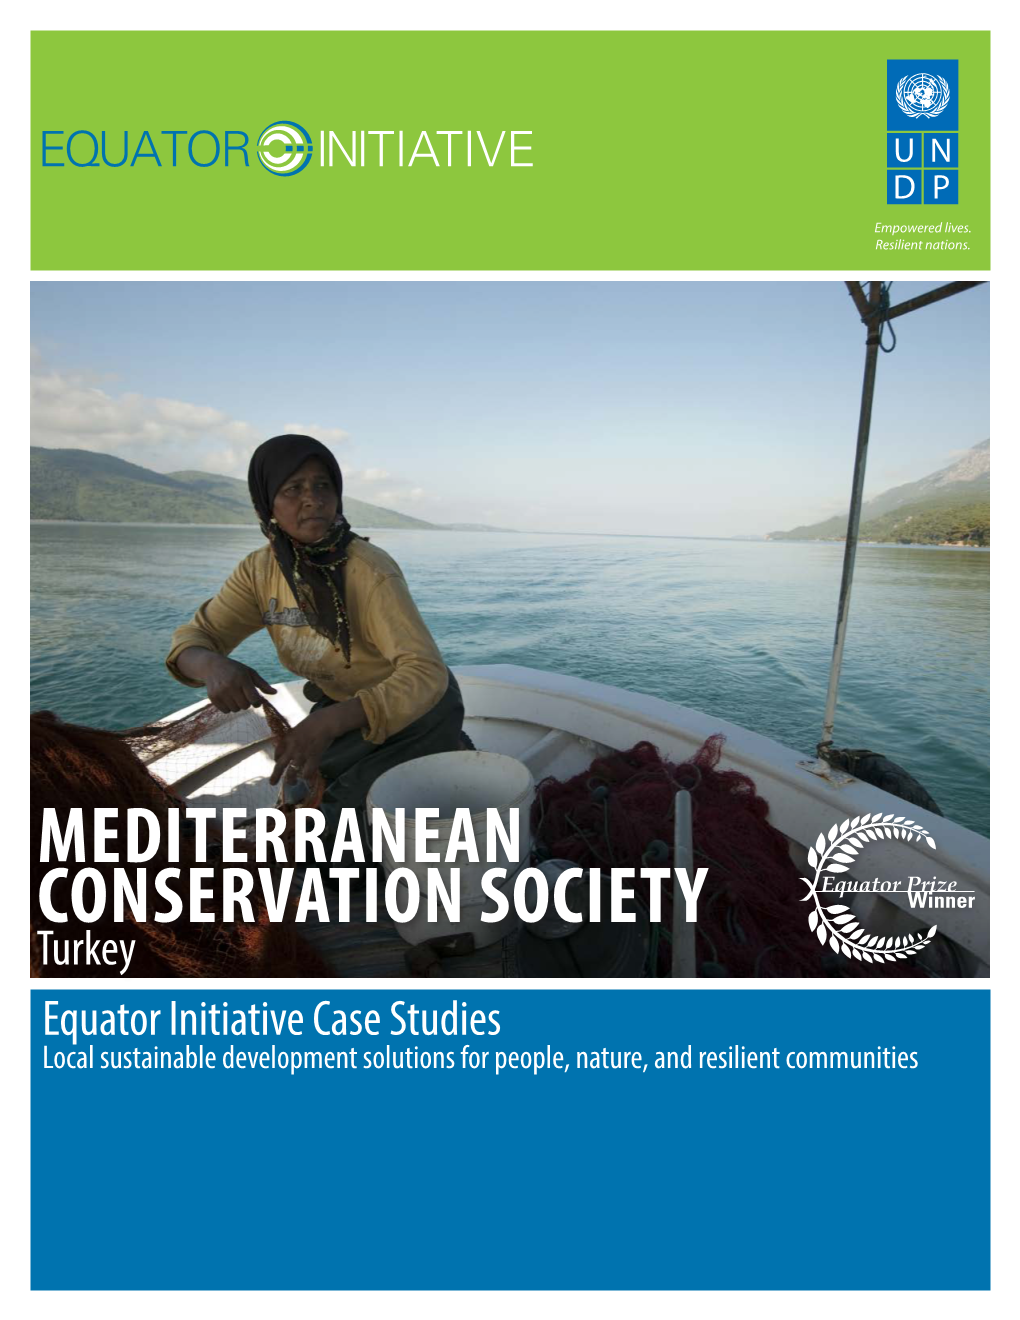 Mediterranean Conservation Society